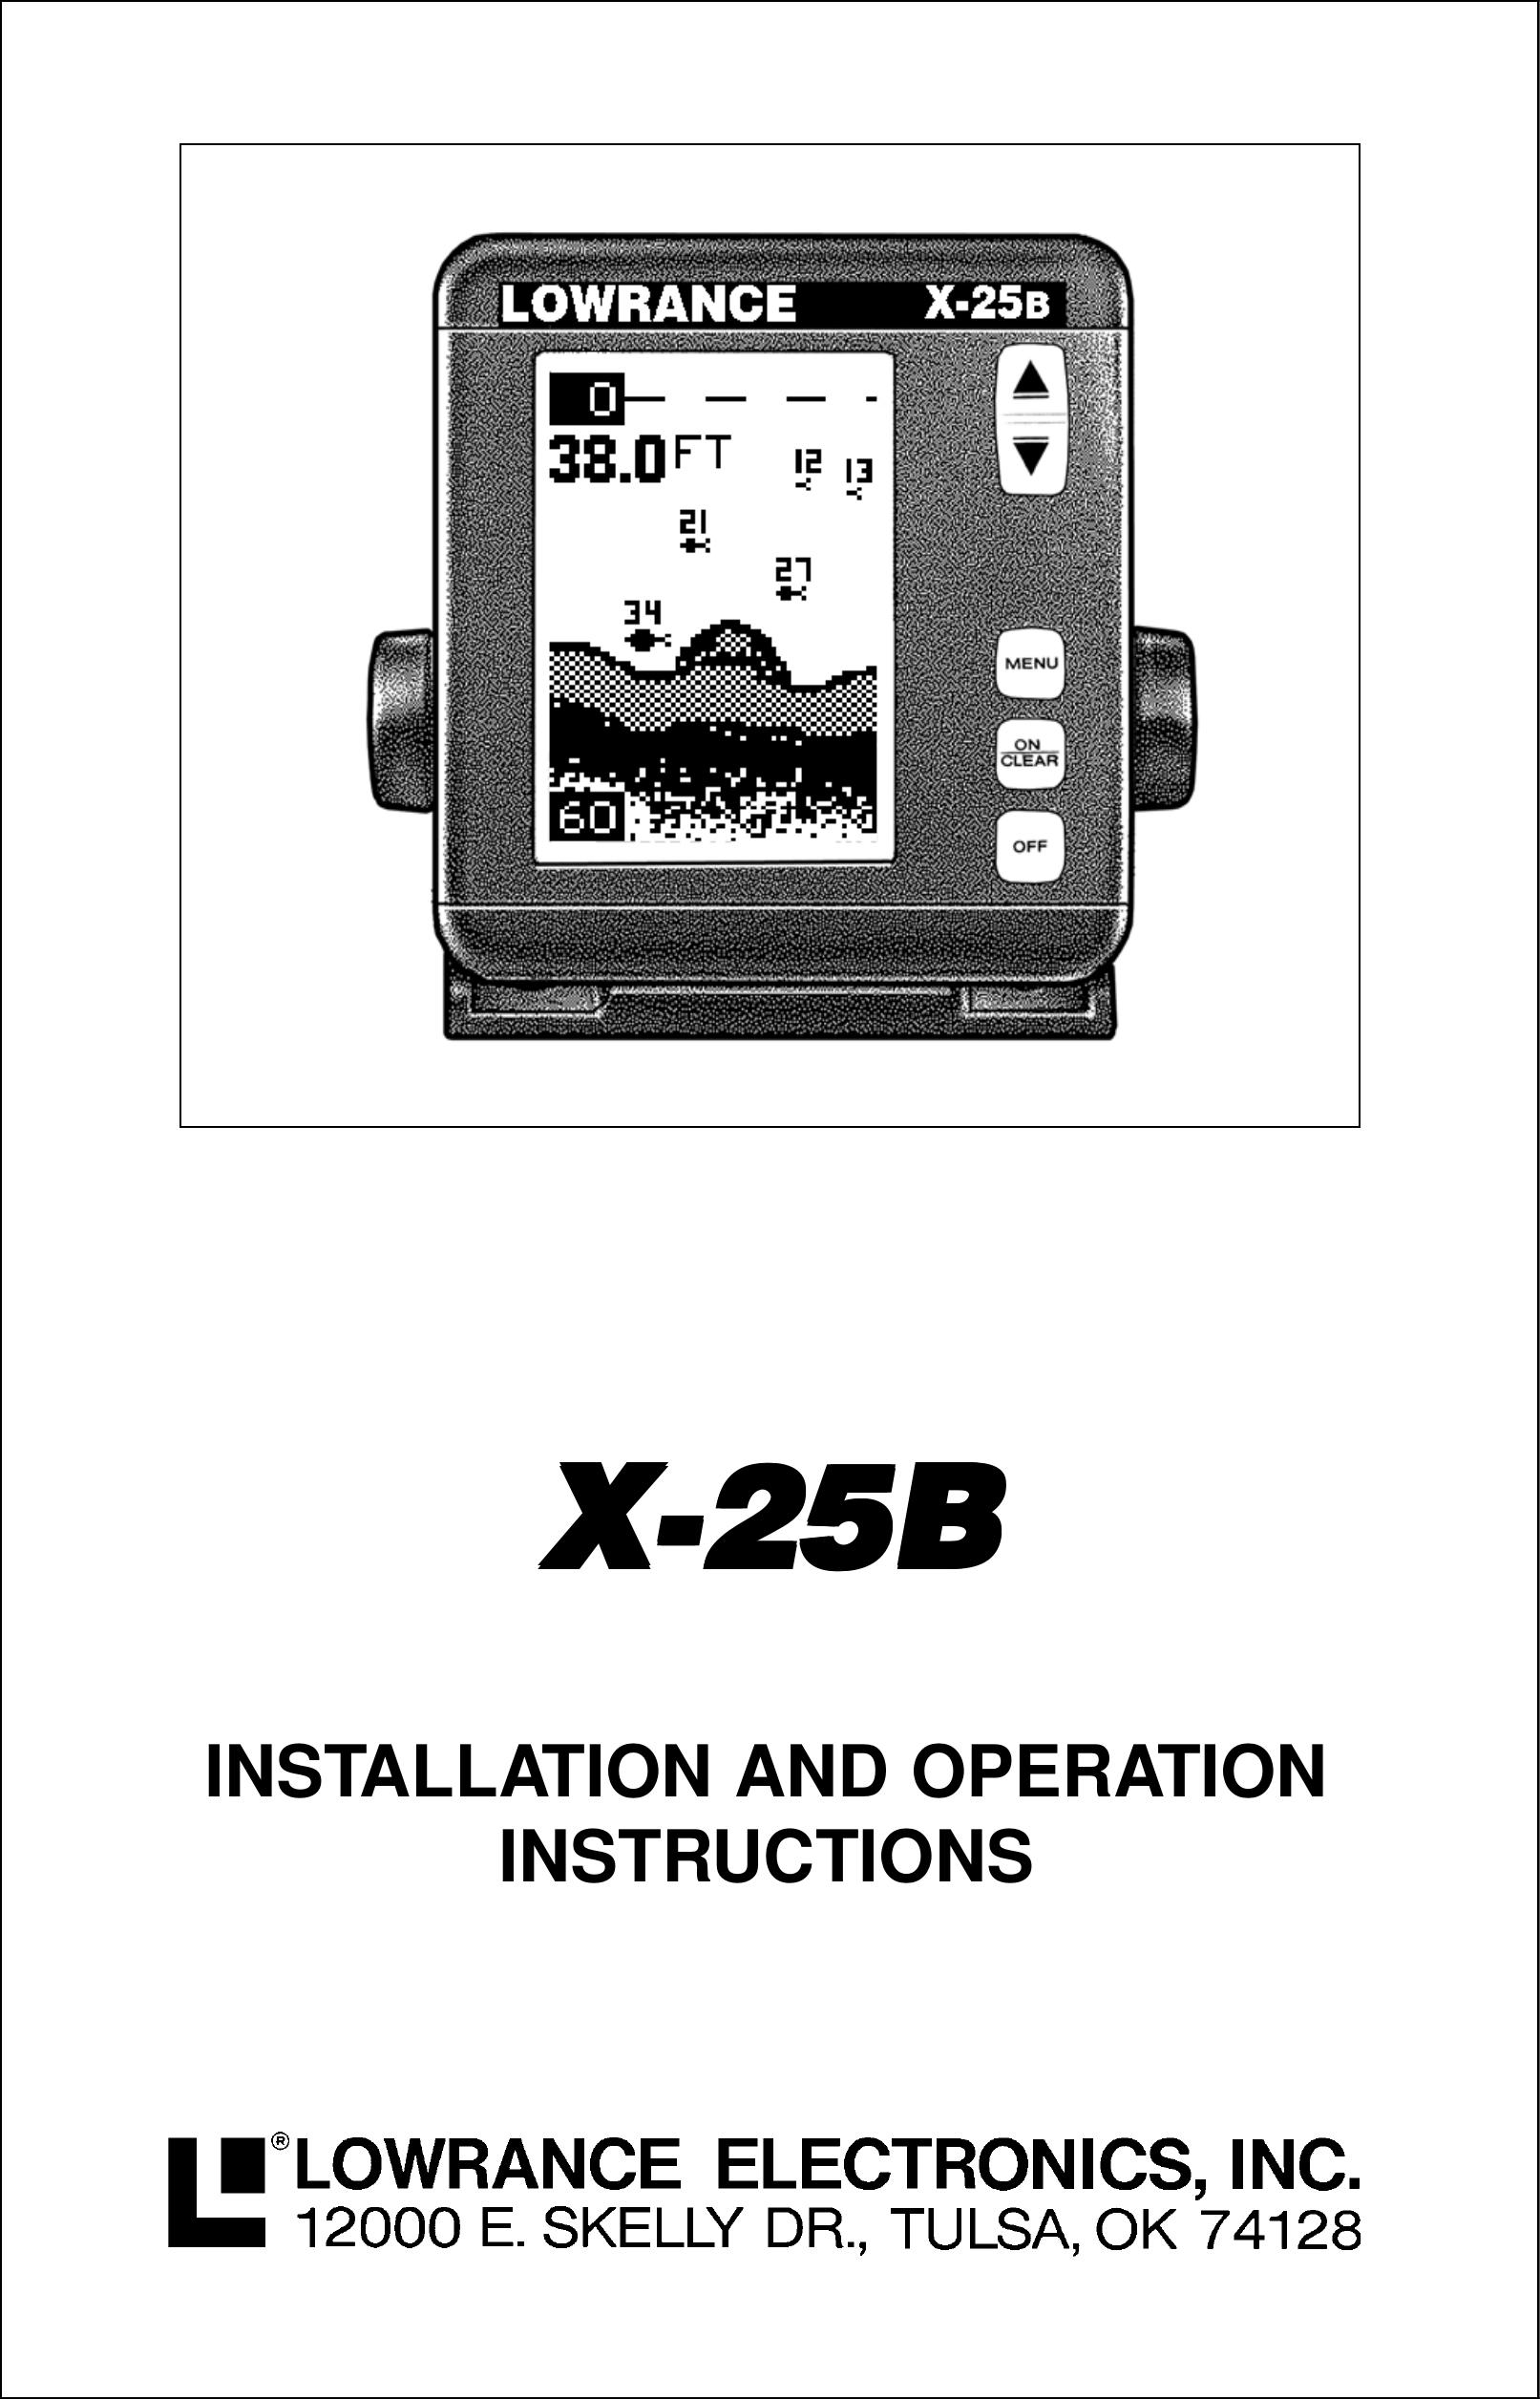 Lowrance electronic X-25B Marine GPS System User Manual